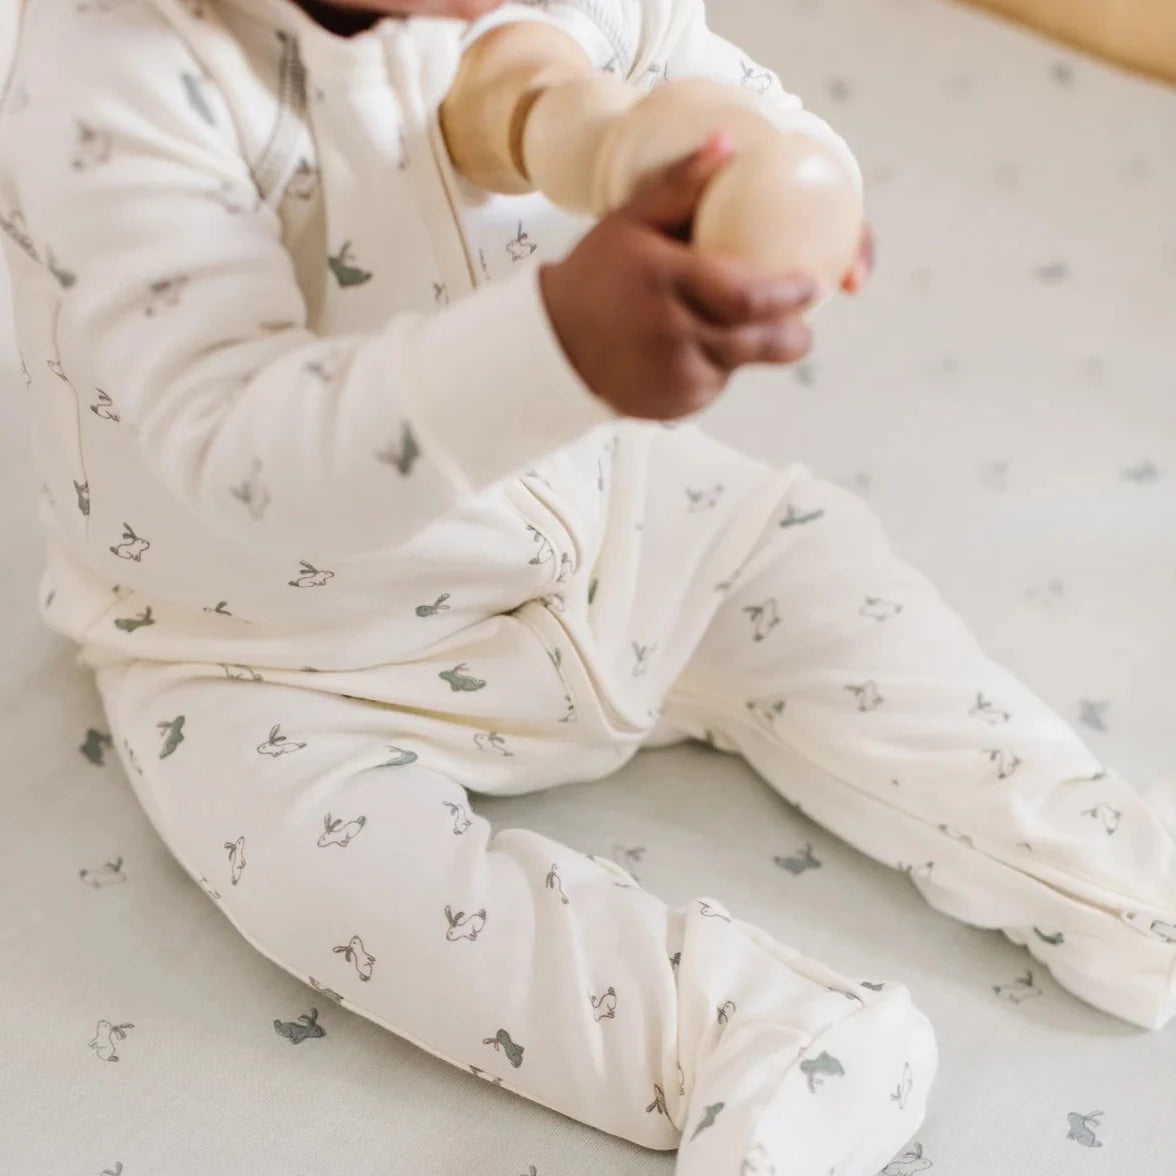 baby sitting in crib wearing hatchling bunny pajamas.